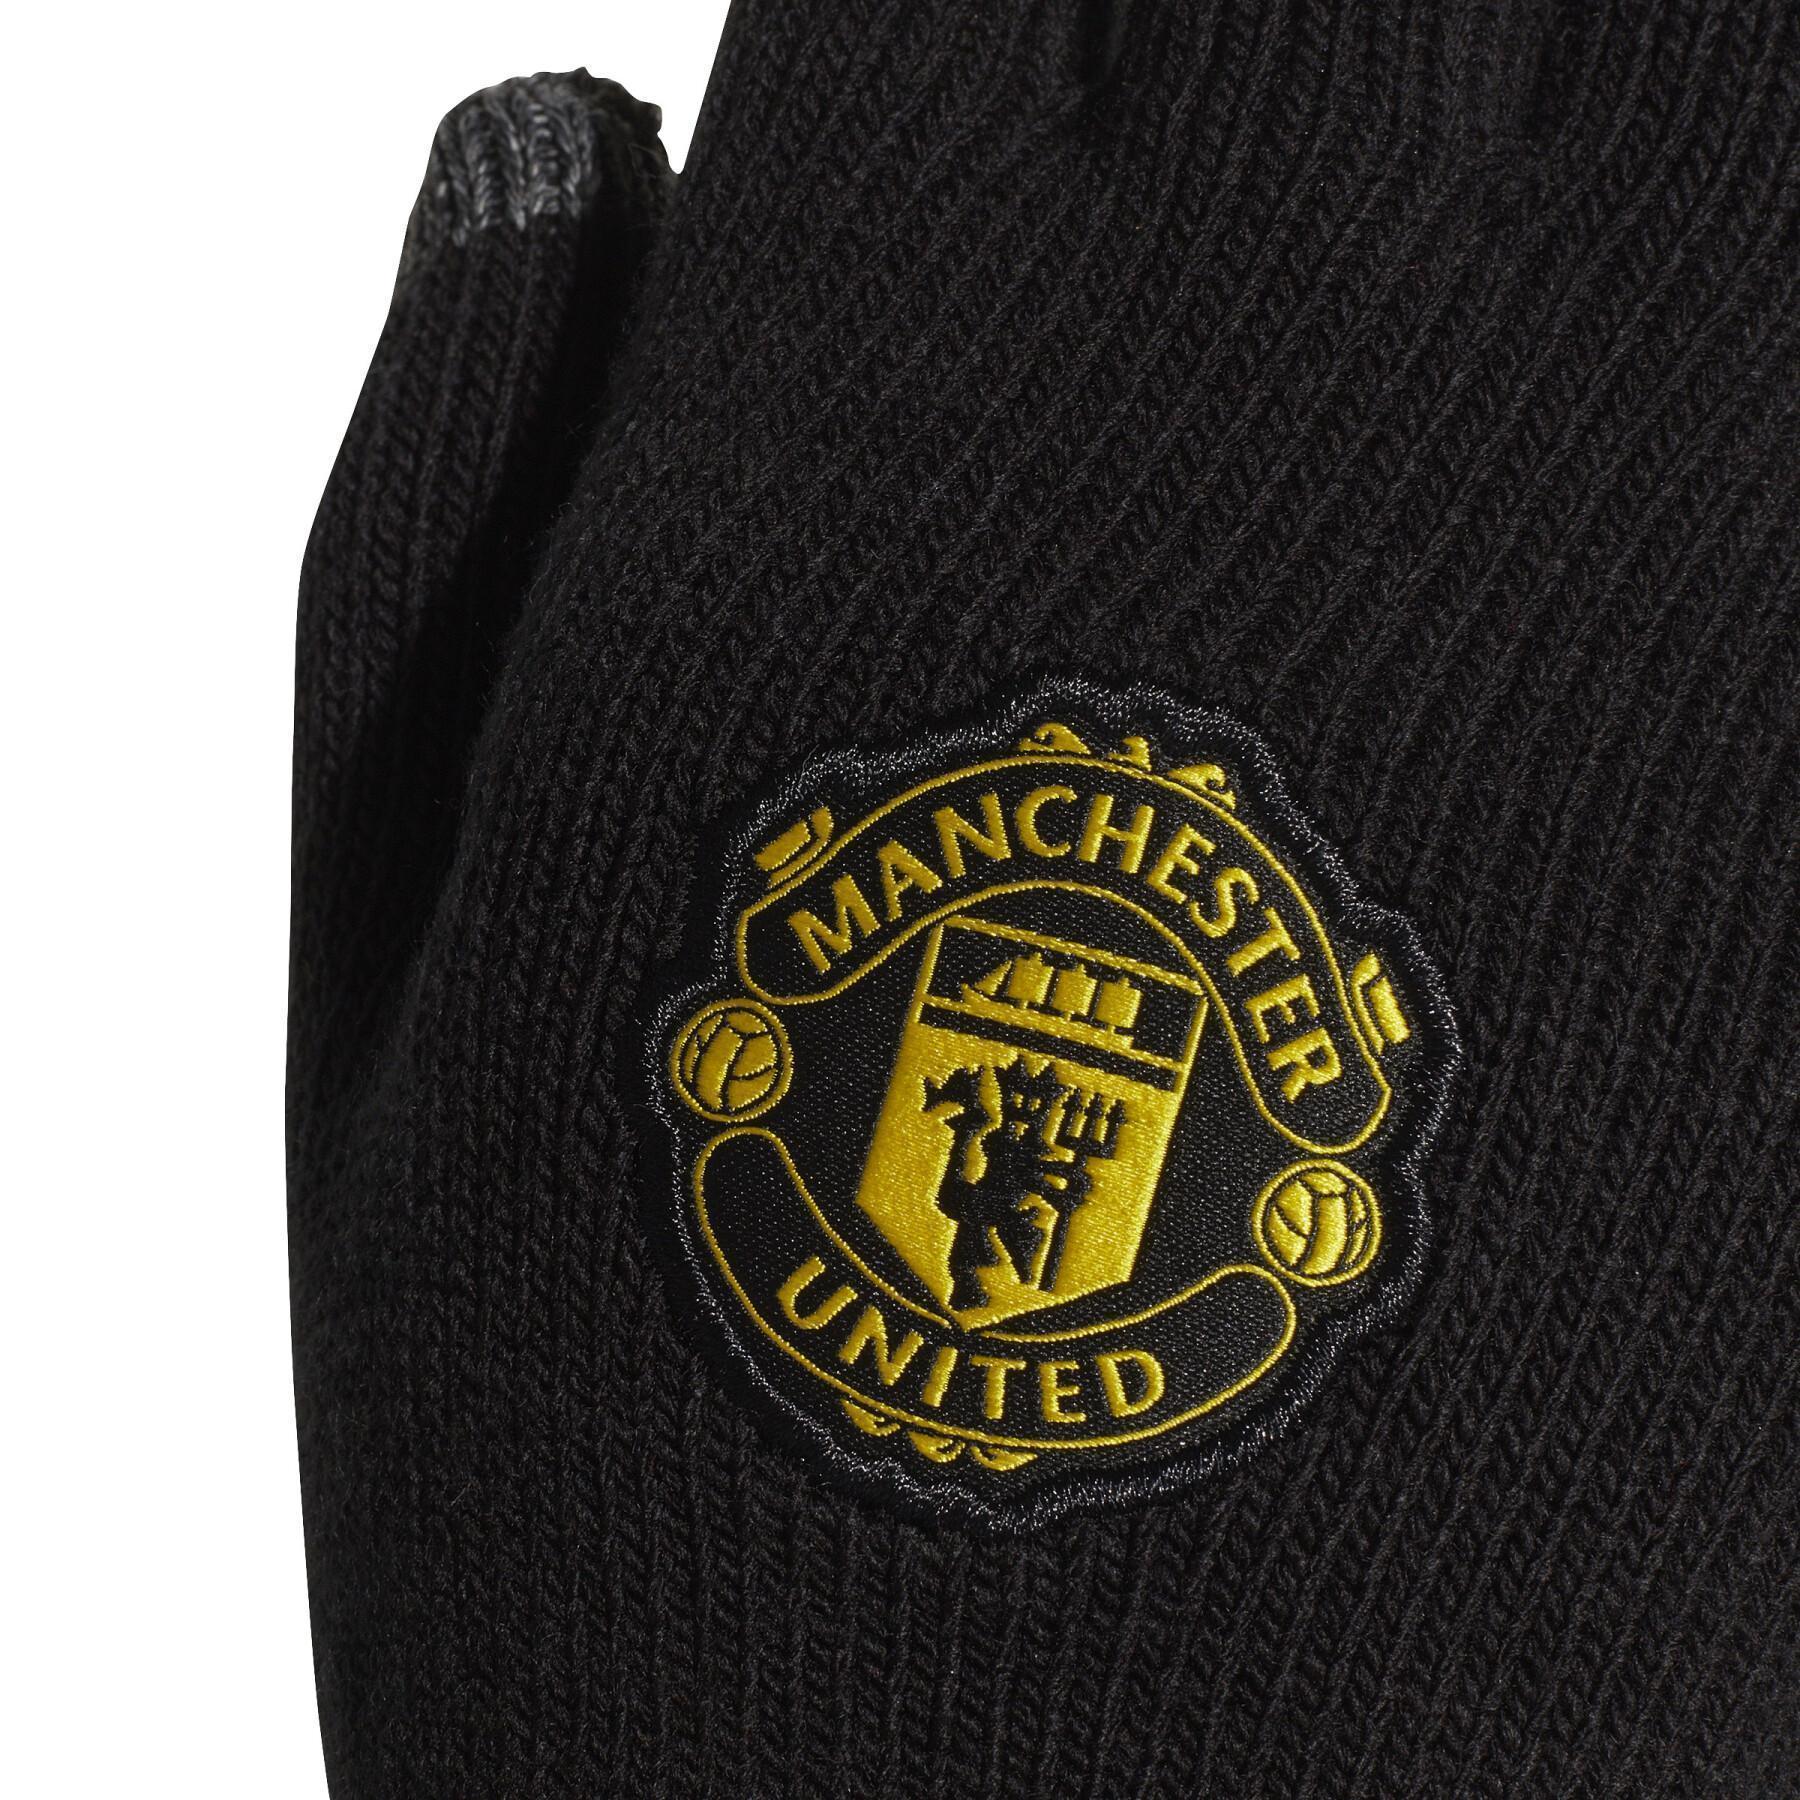 Handschoenen Manchester United